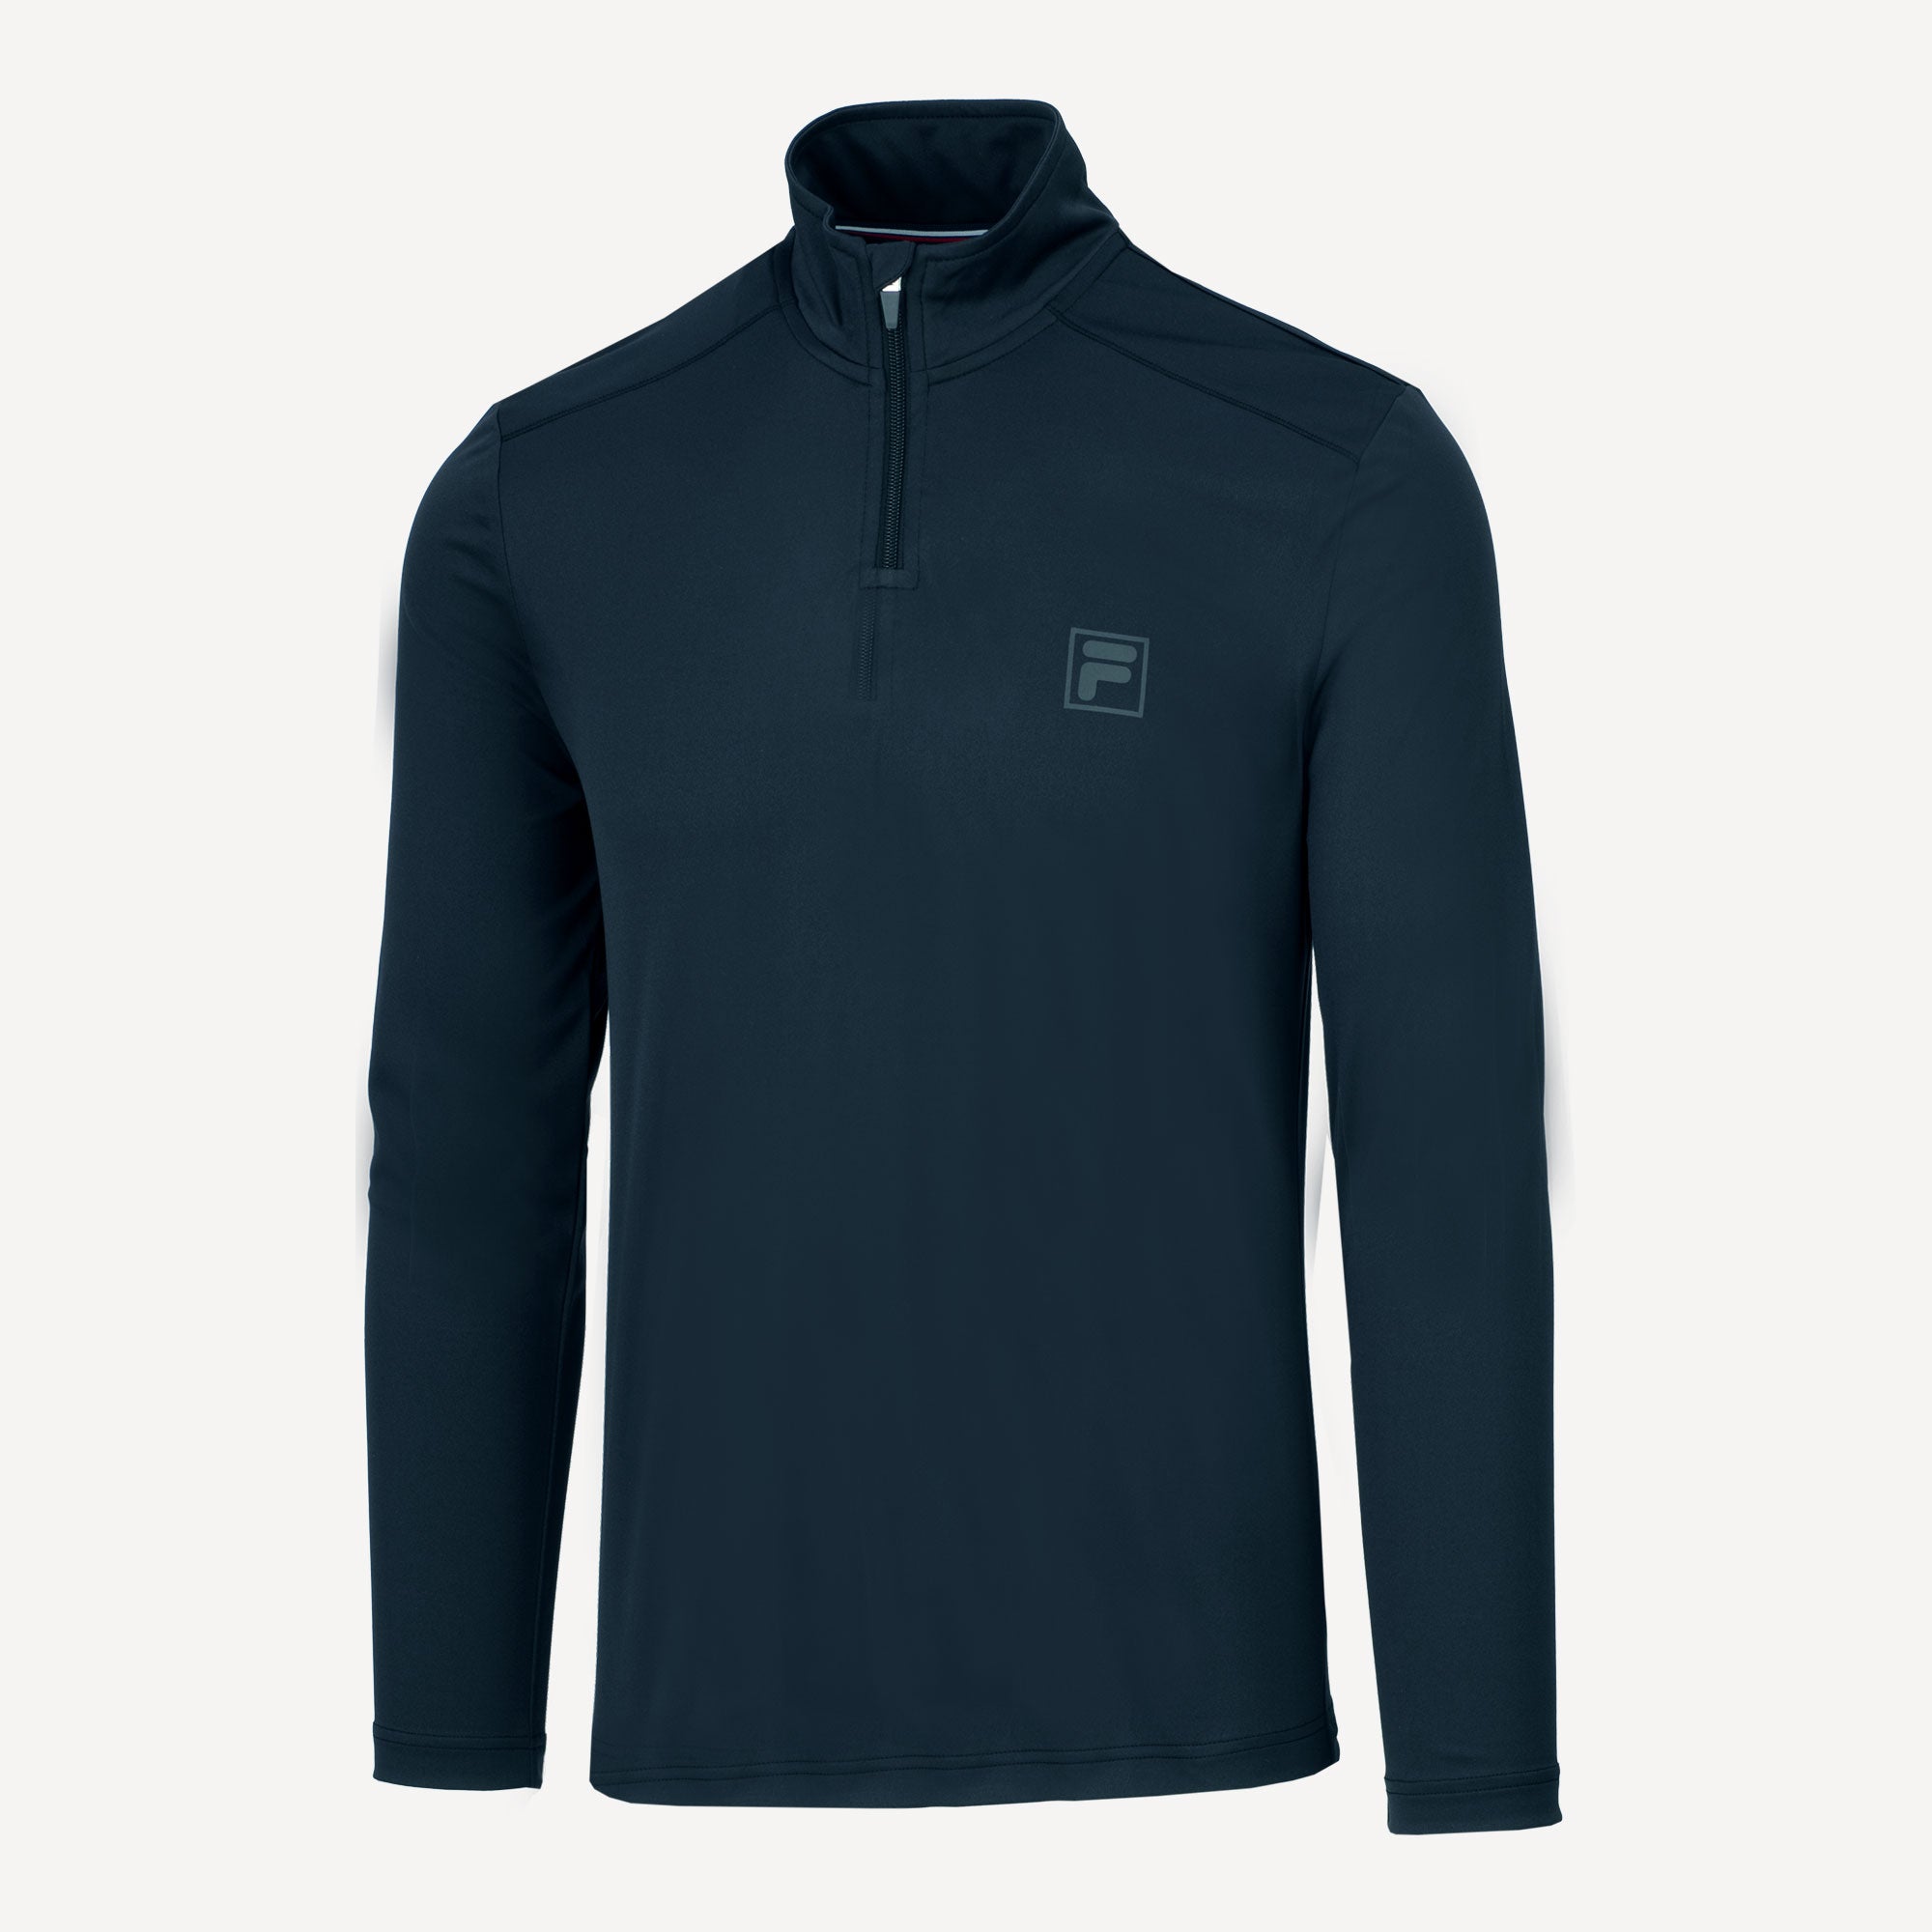 Fila Victor Men's Long-Sleeve Tennis Shirt Blue (1)